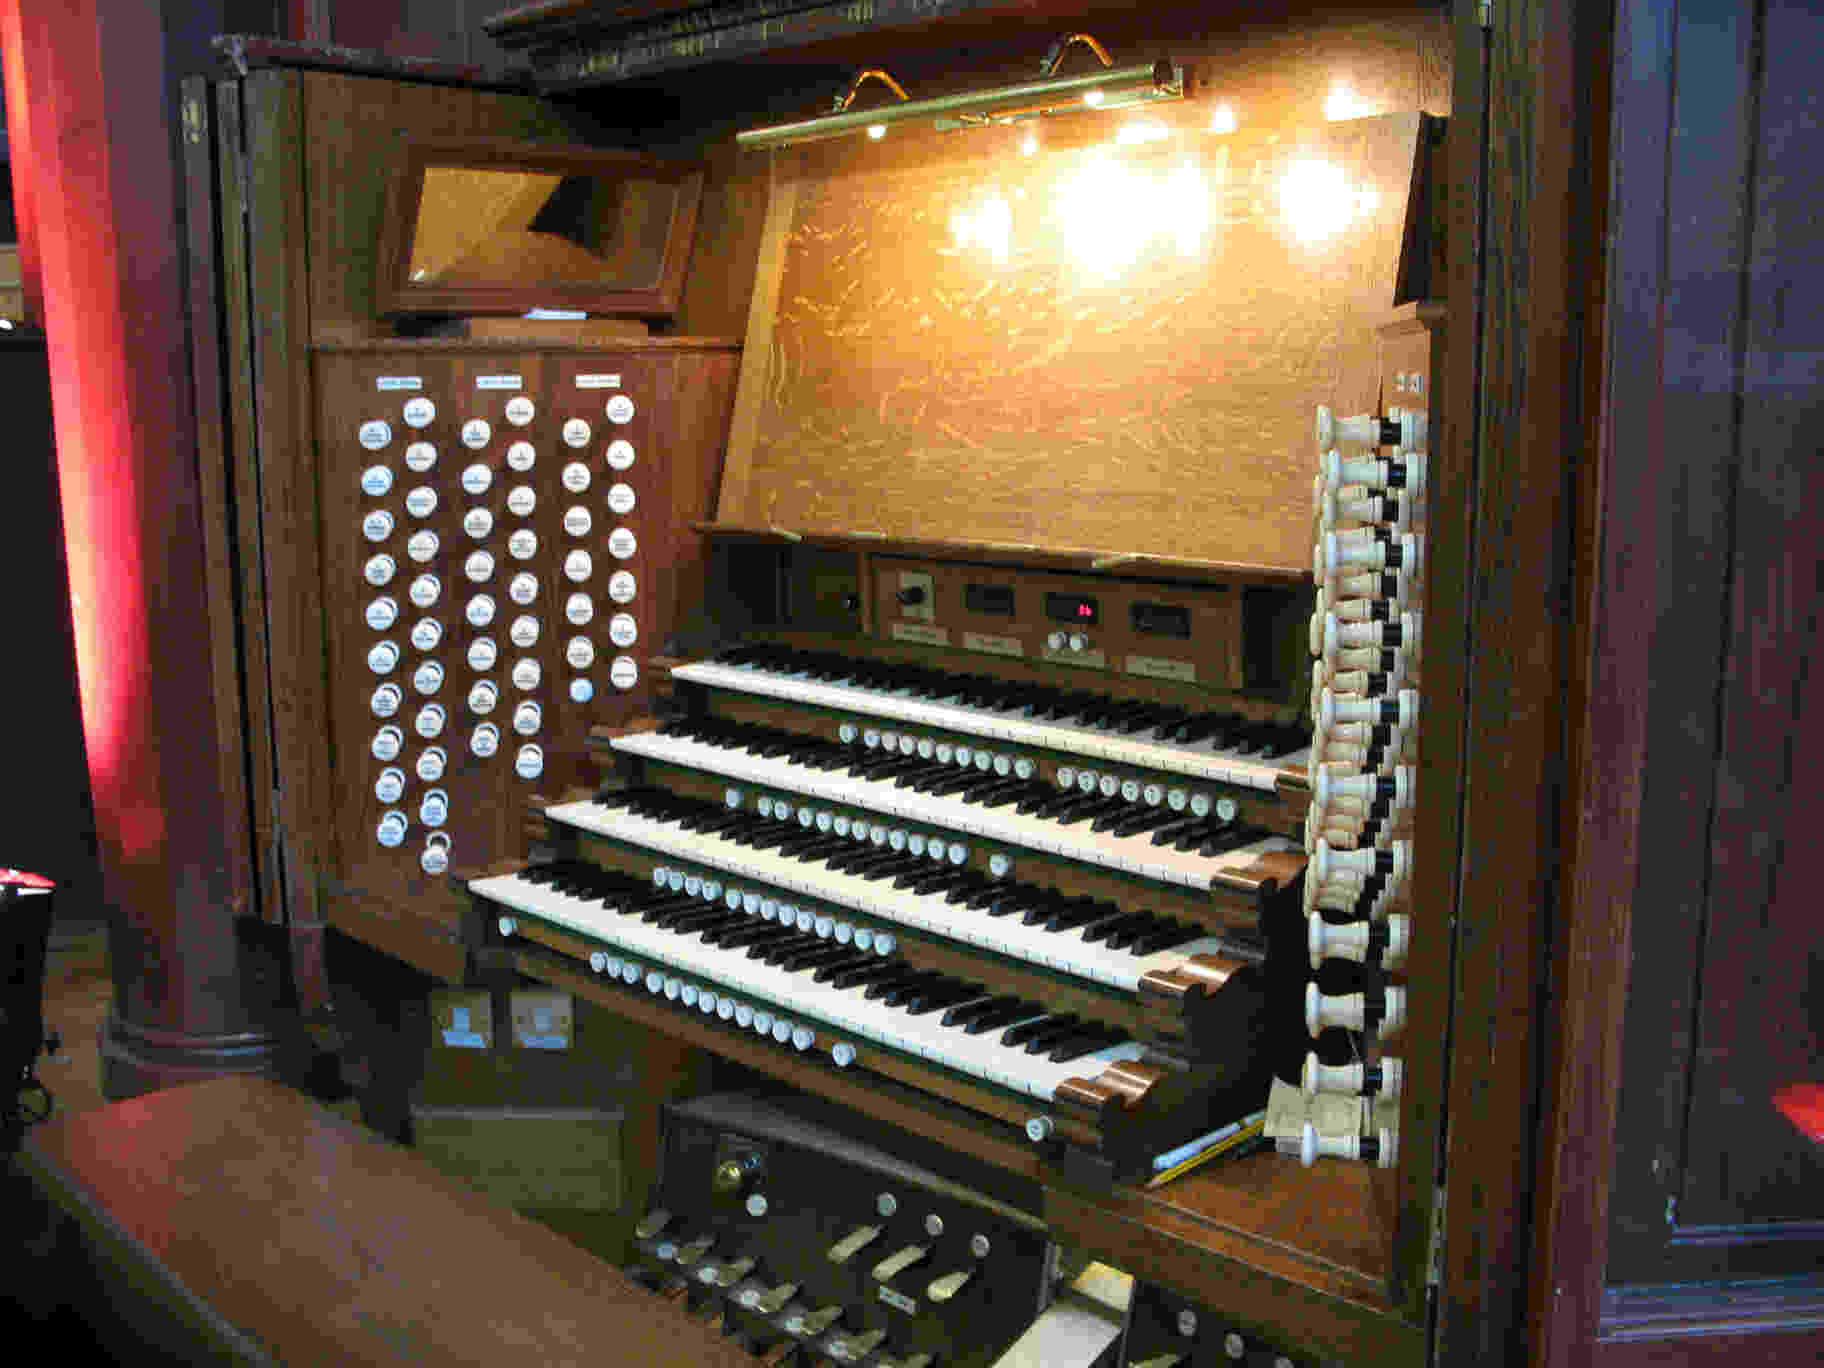 Ulster Hall organ console, 2012